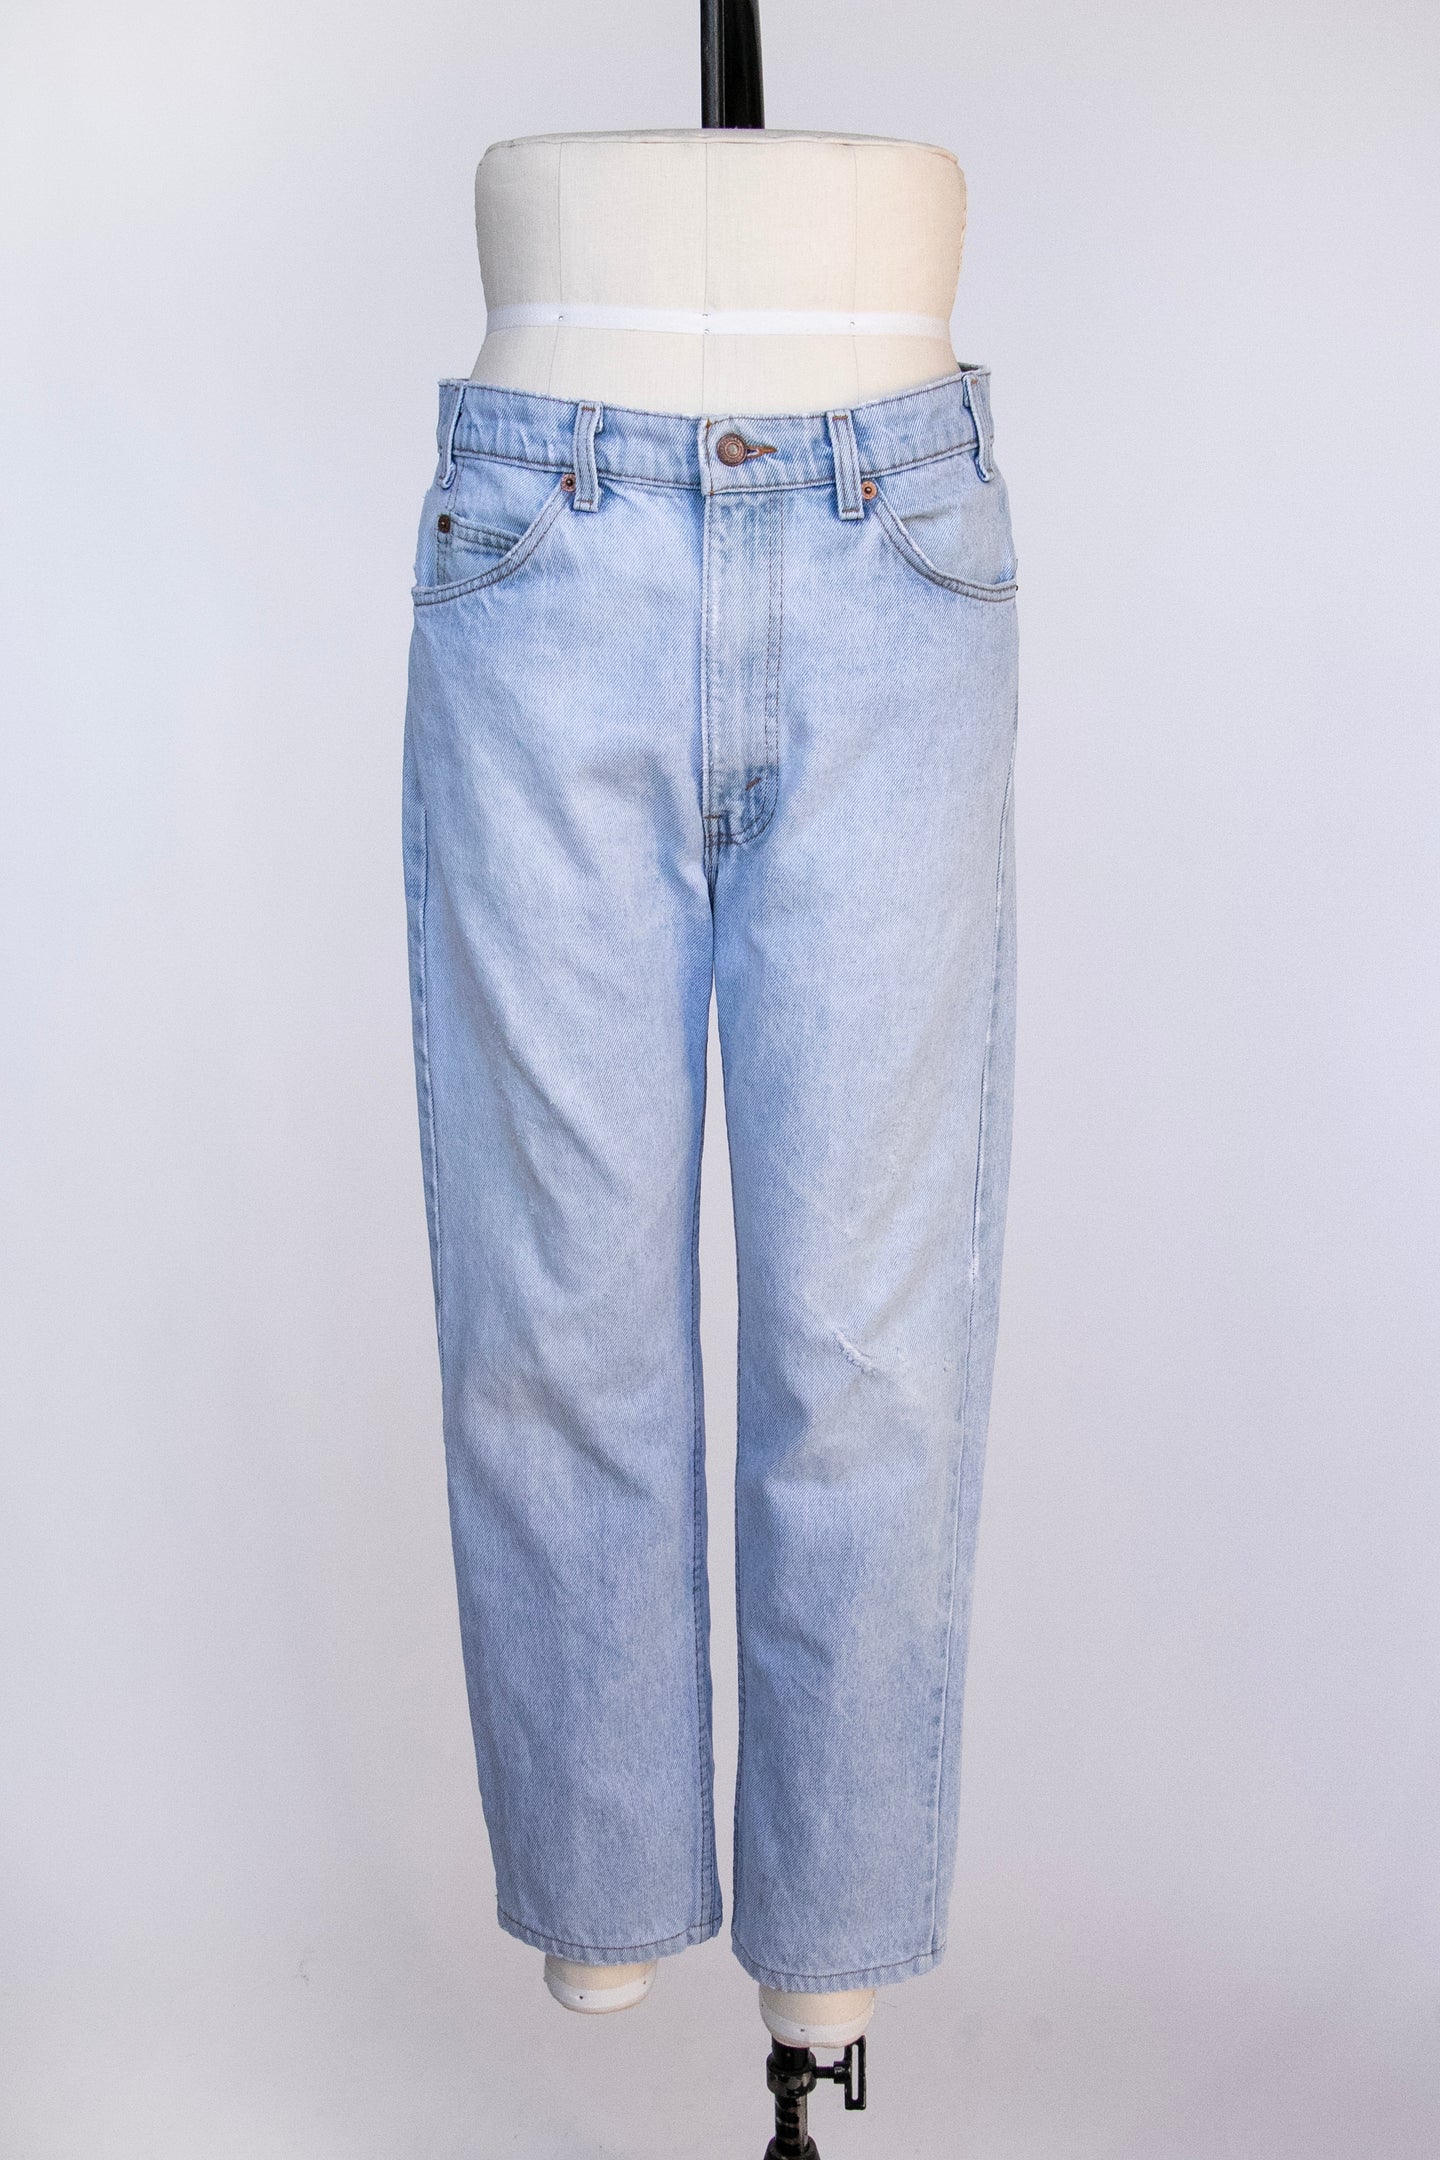 Levi's 550 Jeans 1990s 33